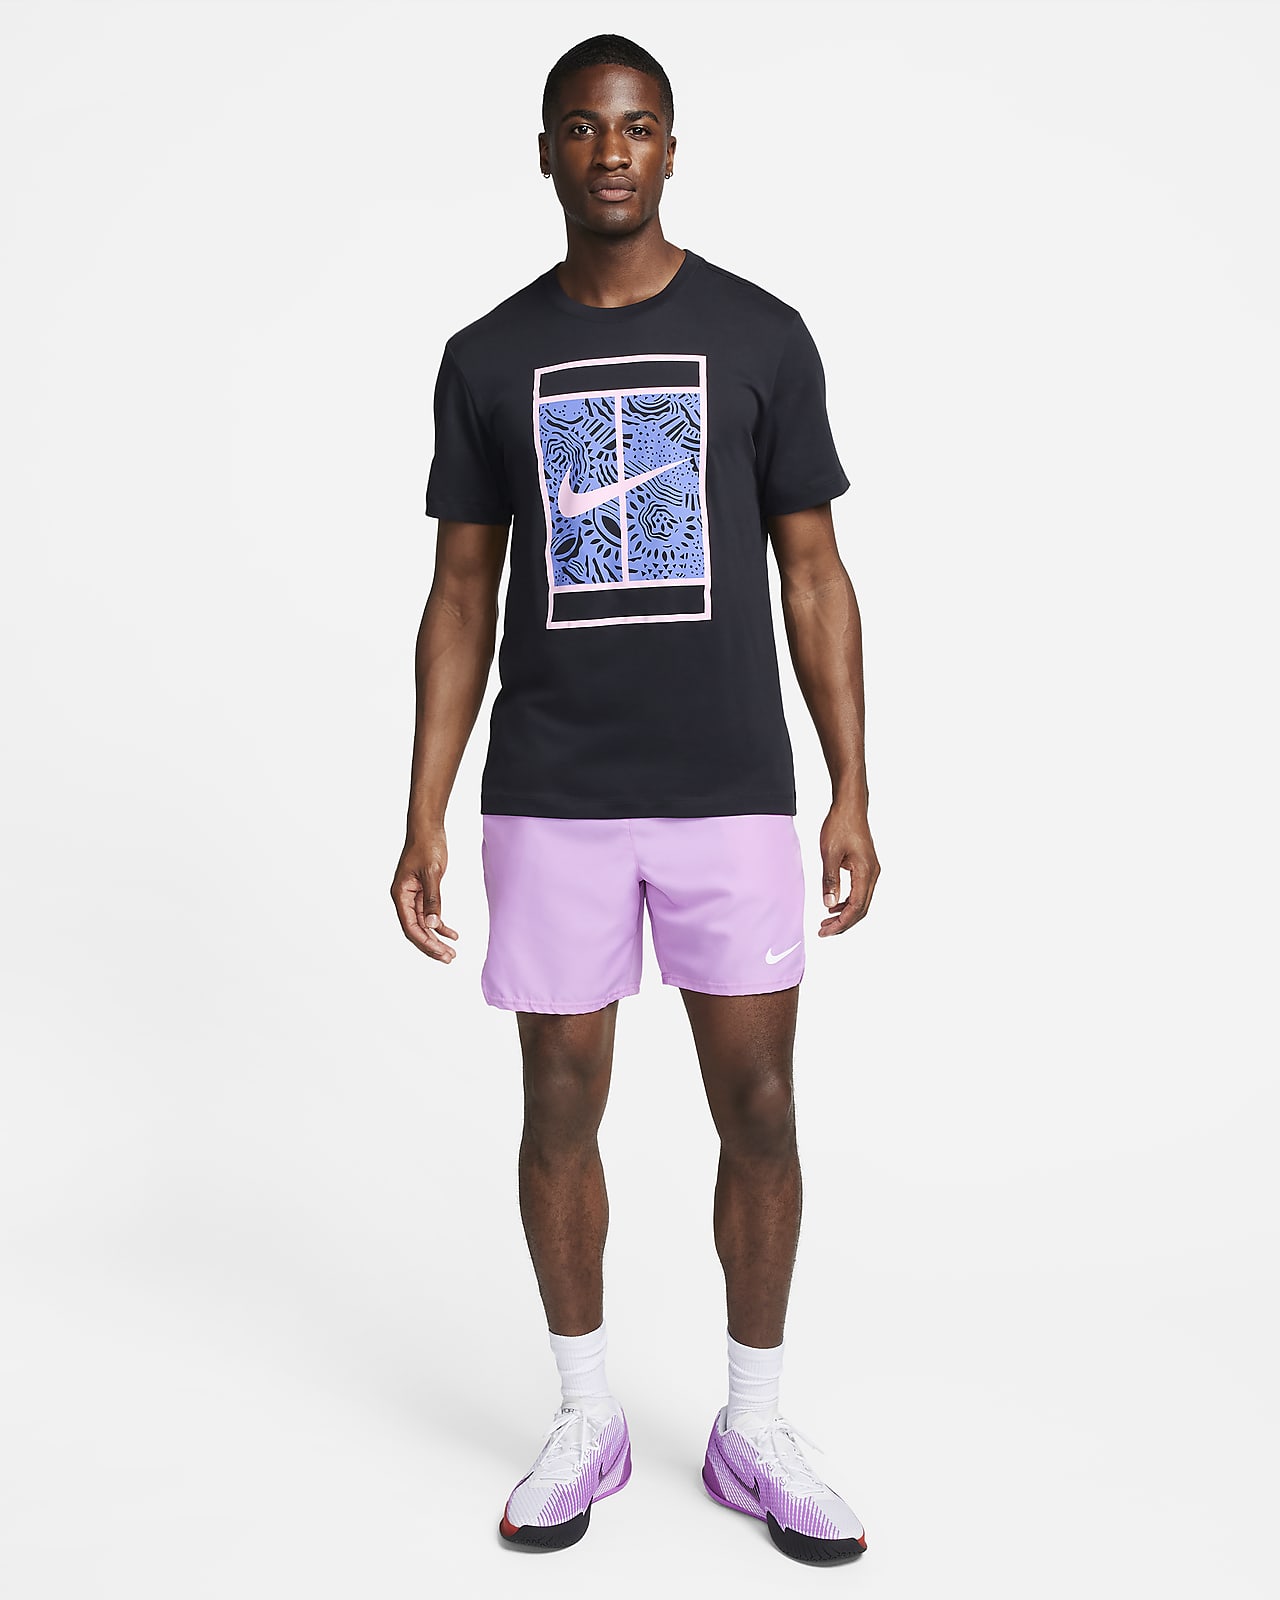 LU Herren-Tennis-T-Shirt. Dri-FIT Nike NikeCourt